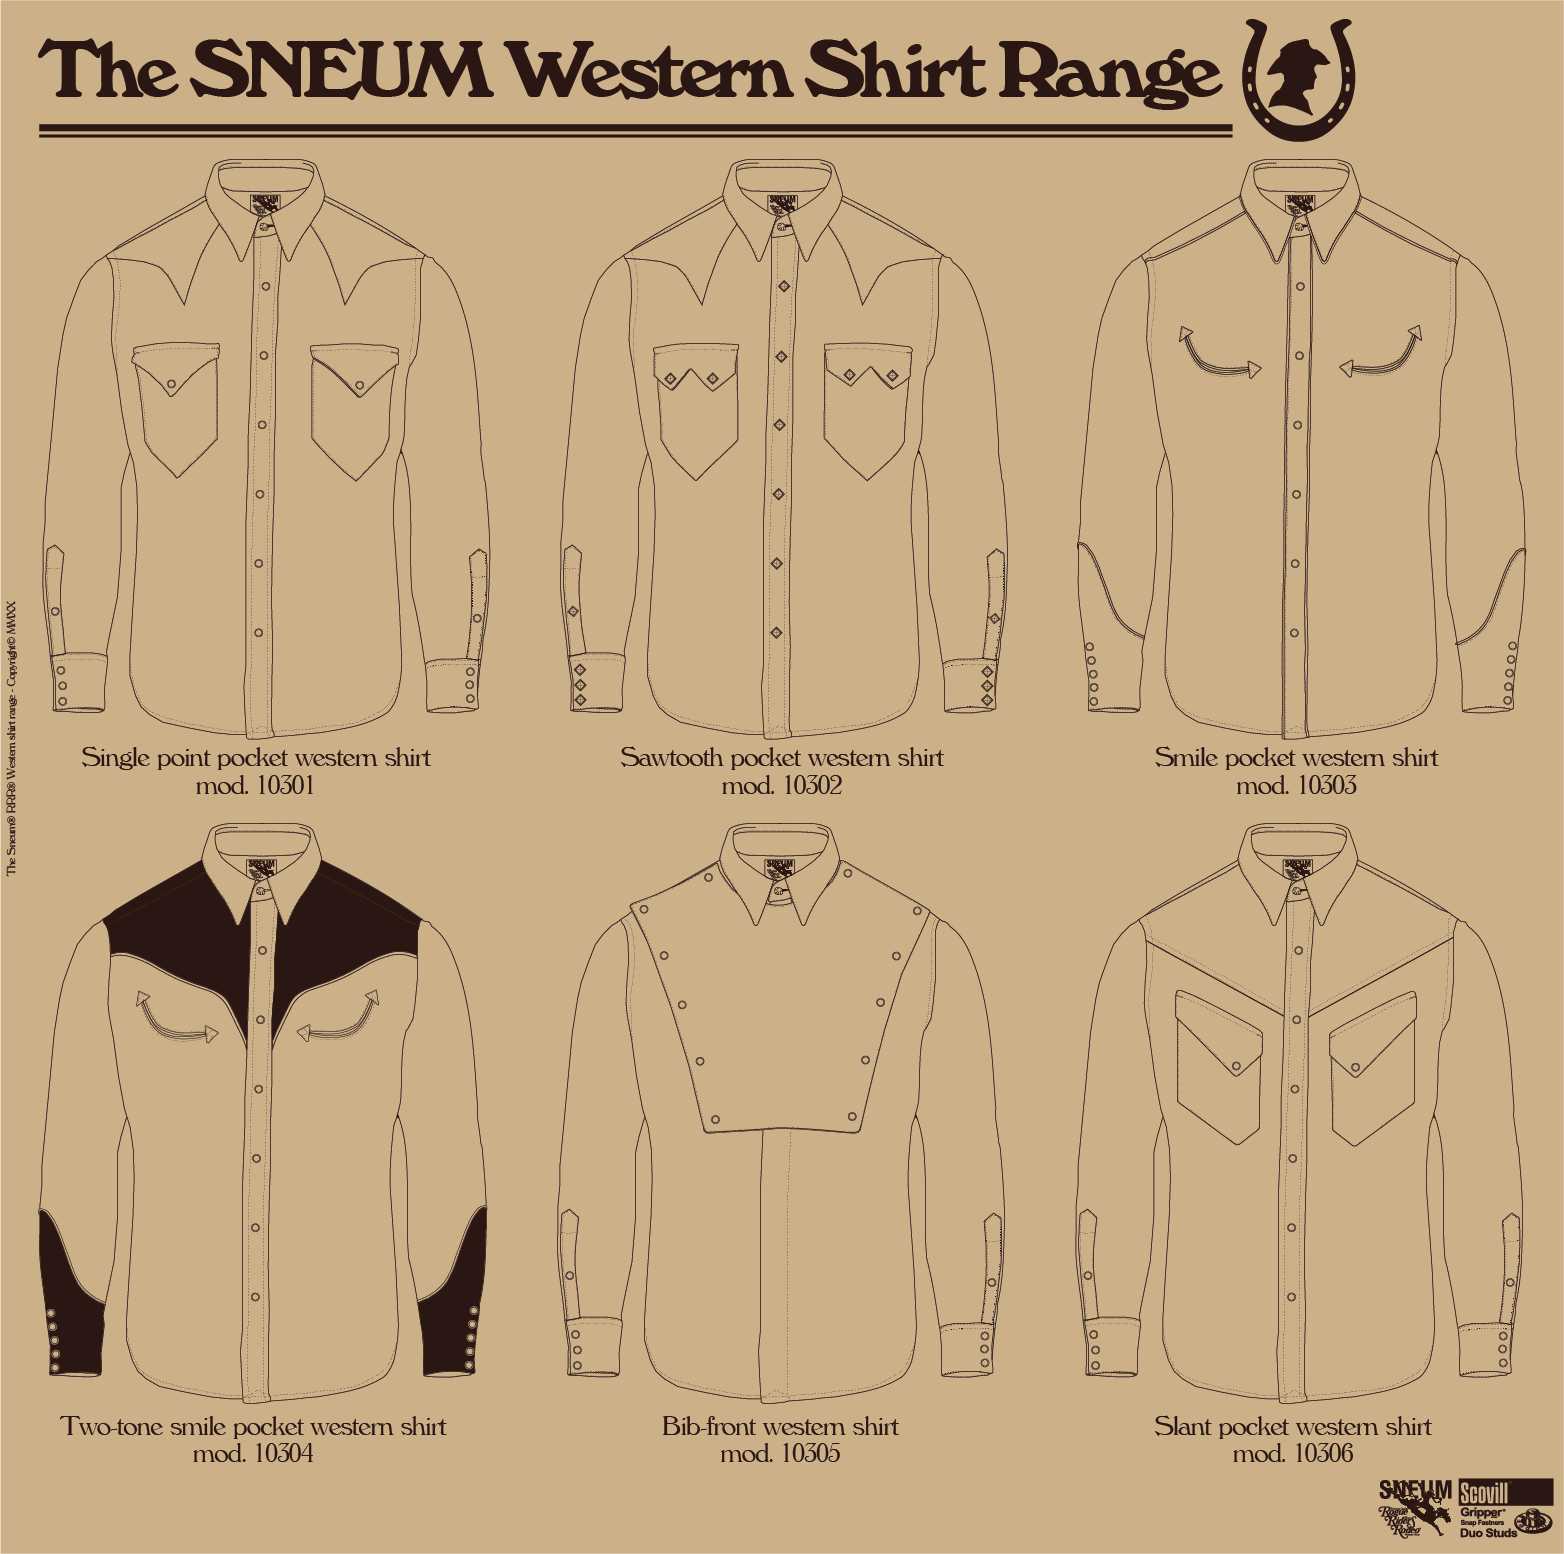 Sneum Western shirt range overview